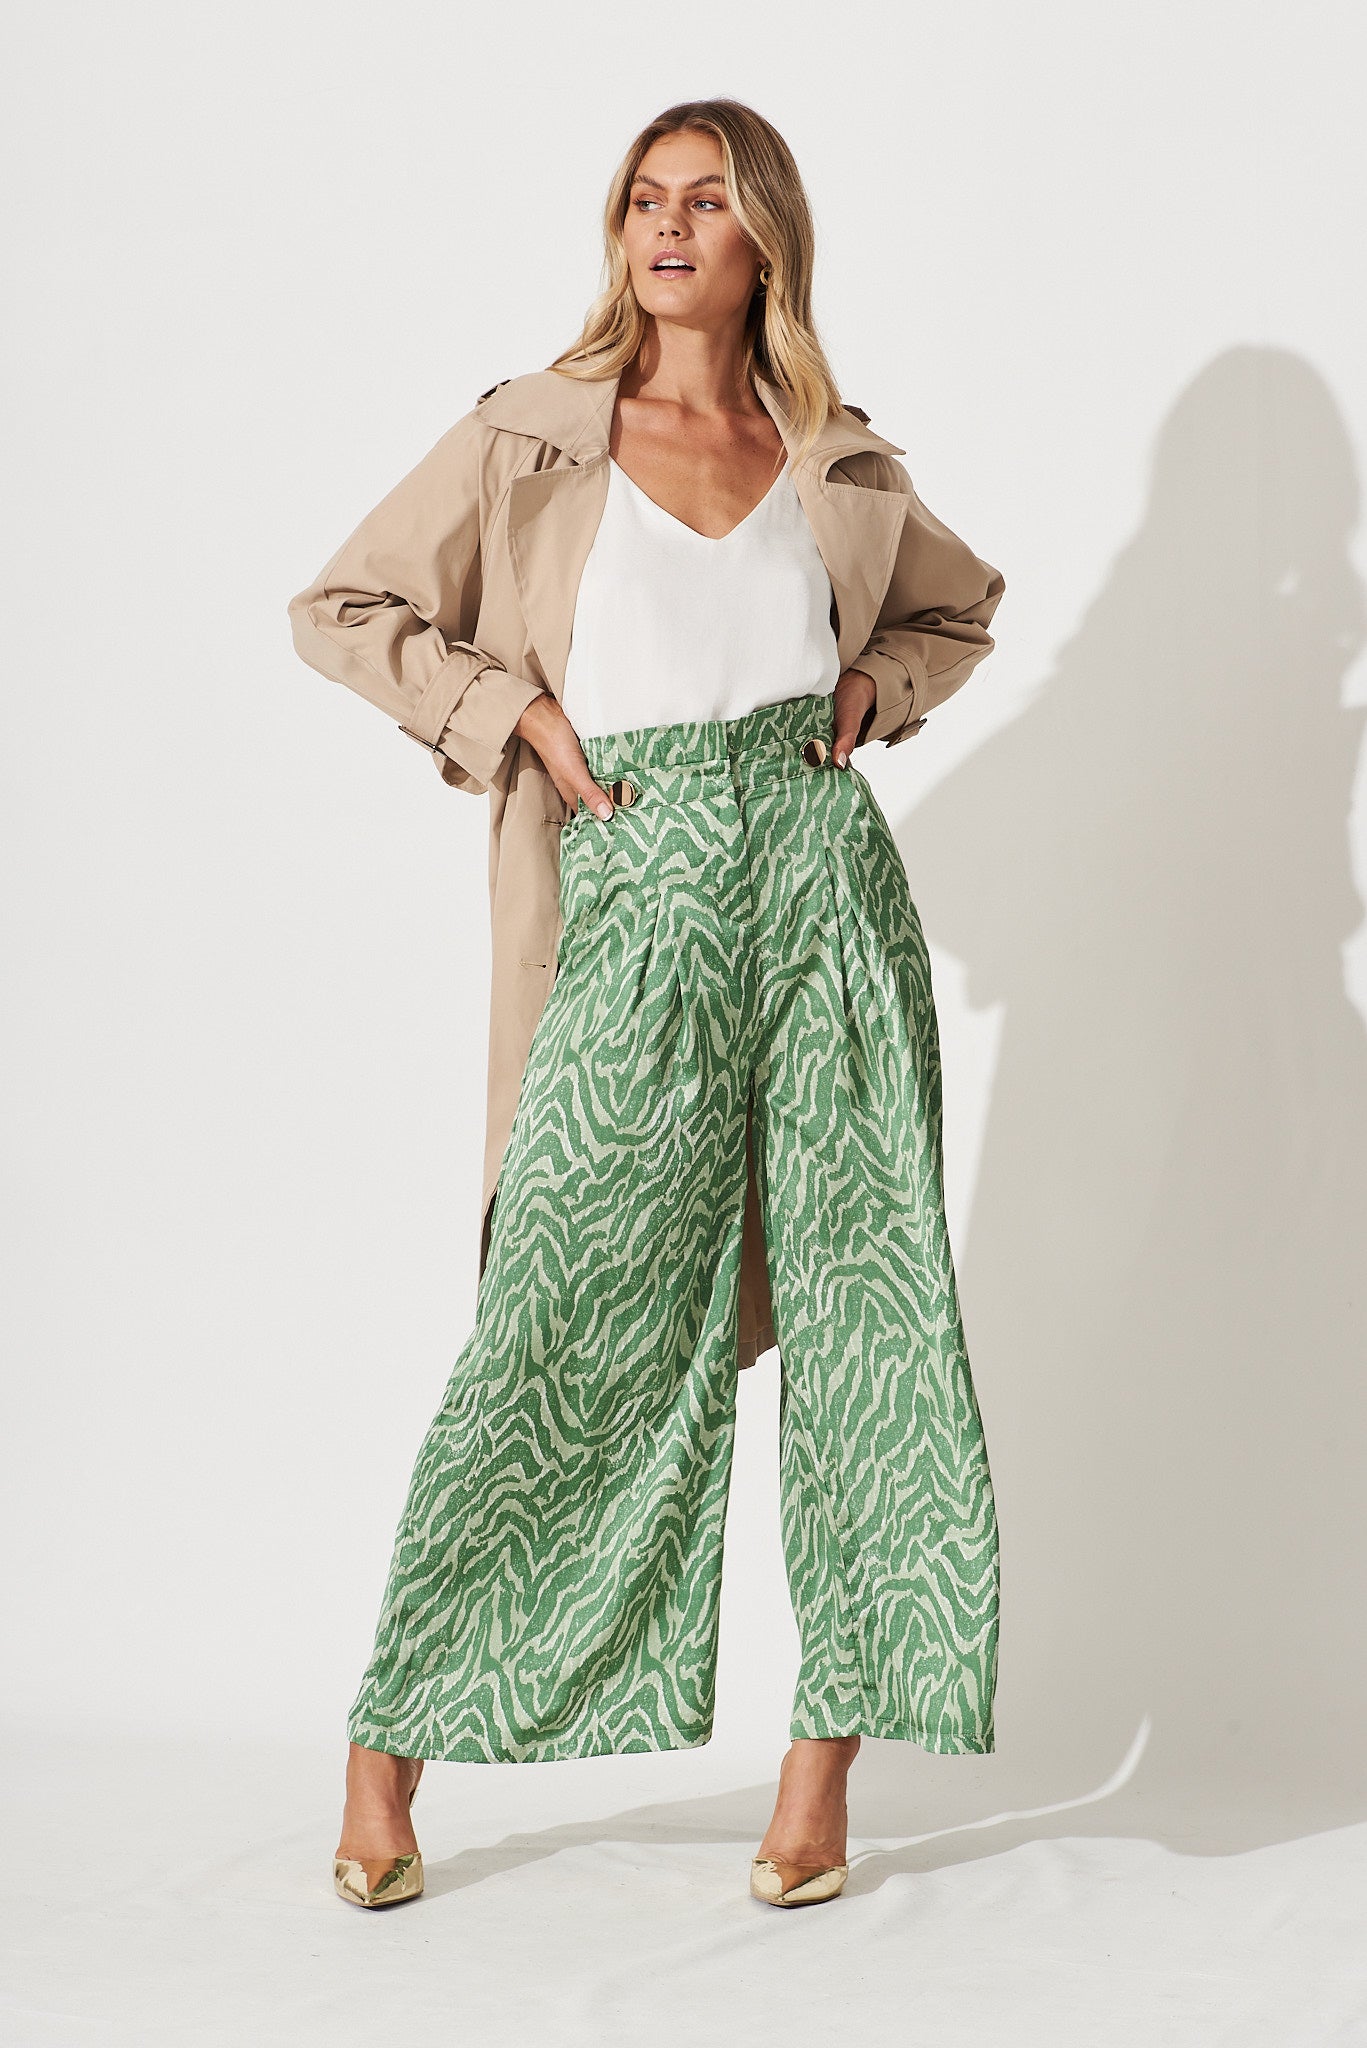 Zara Printed Pants - Gem